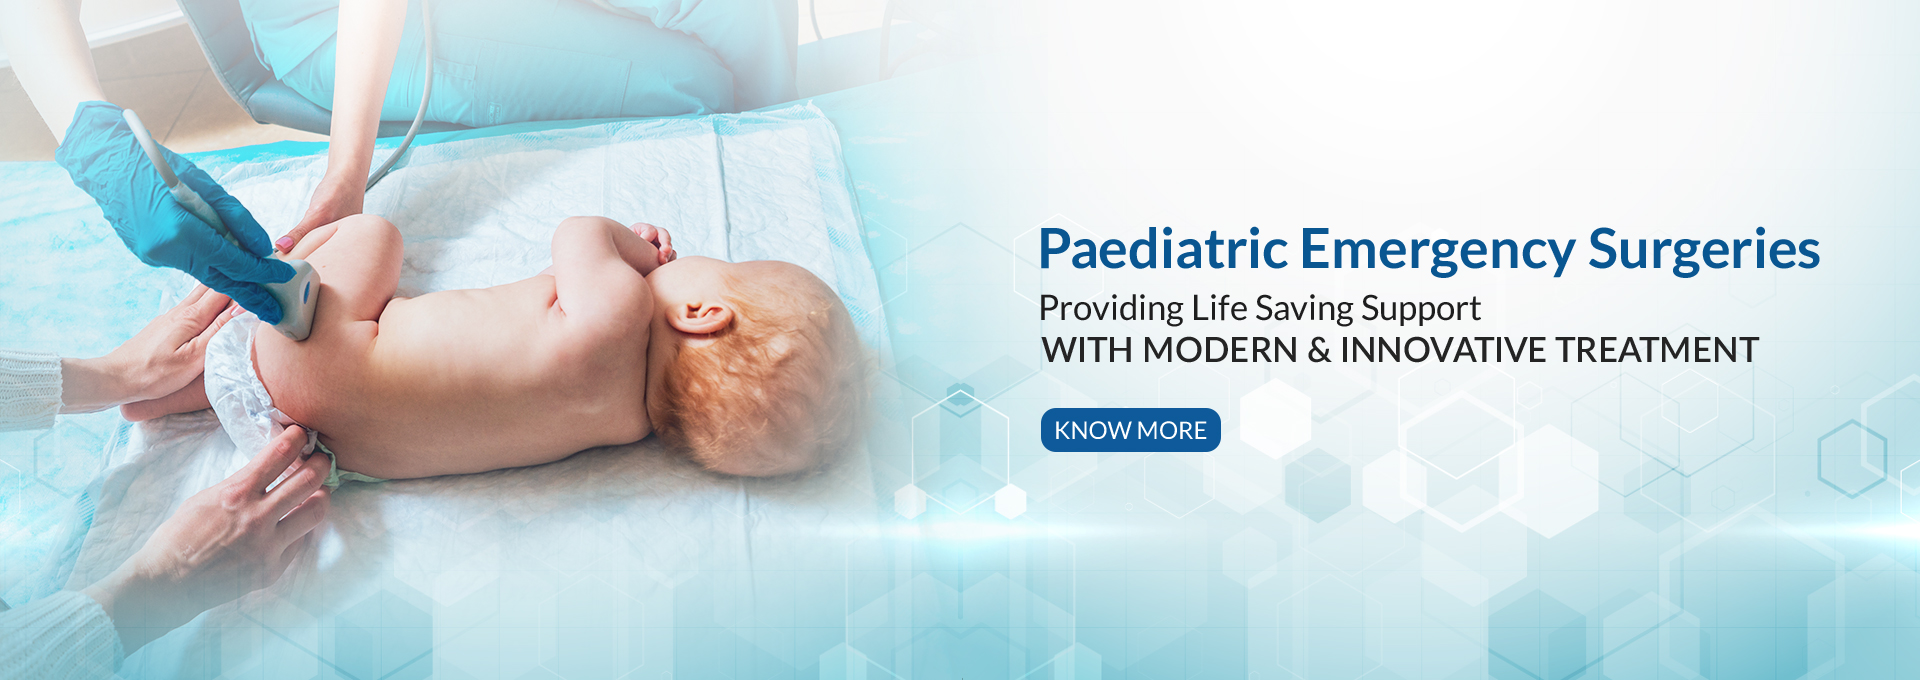 Paediatric Emergency Surgeries